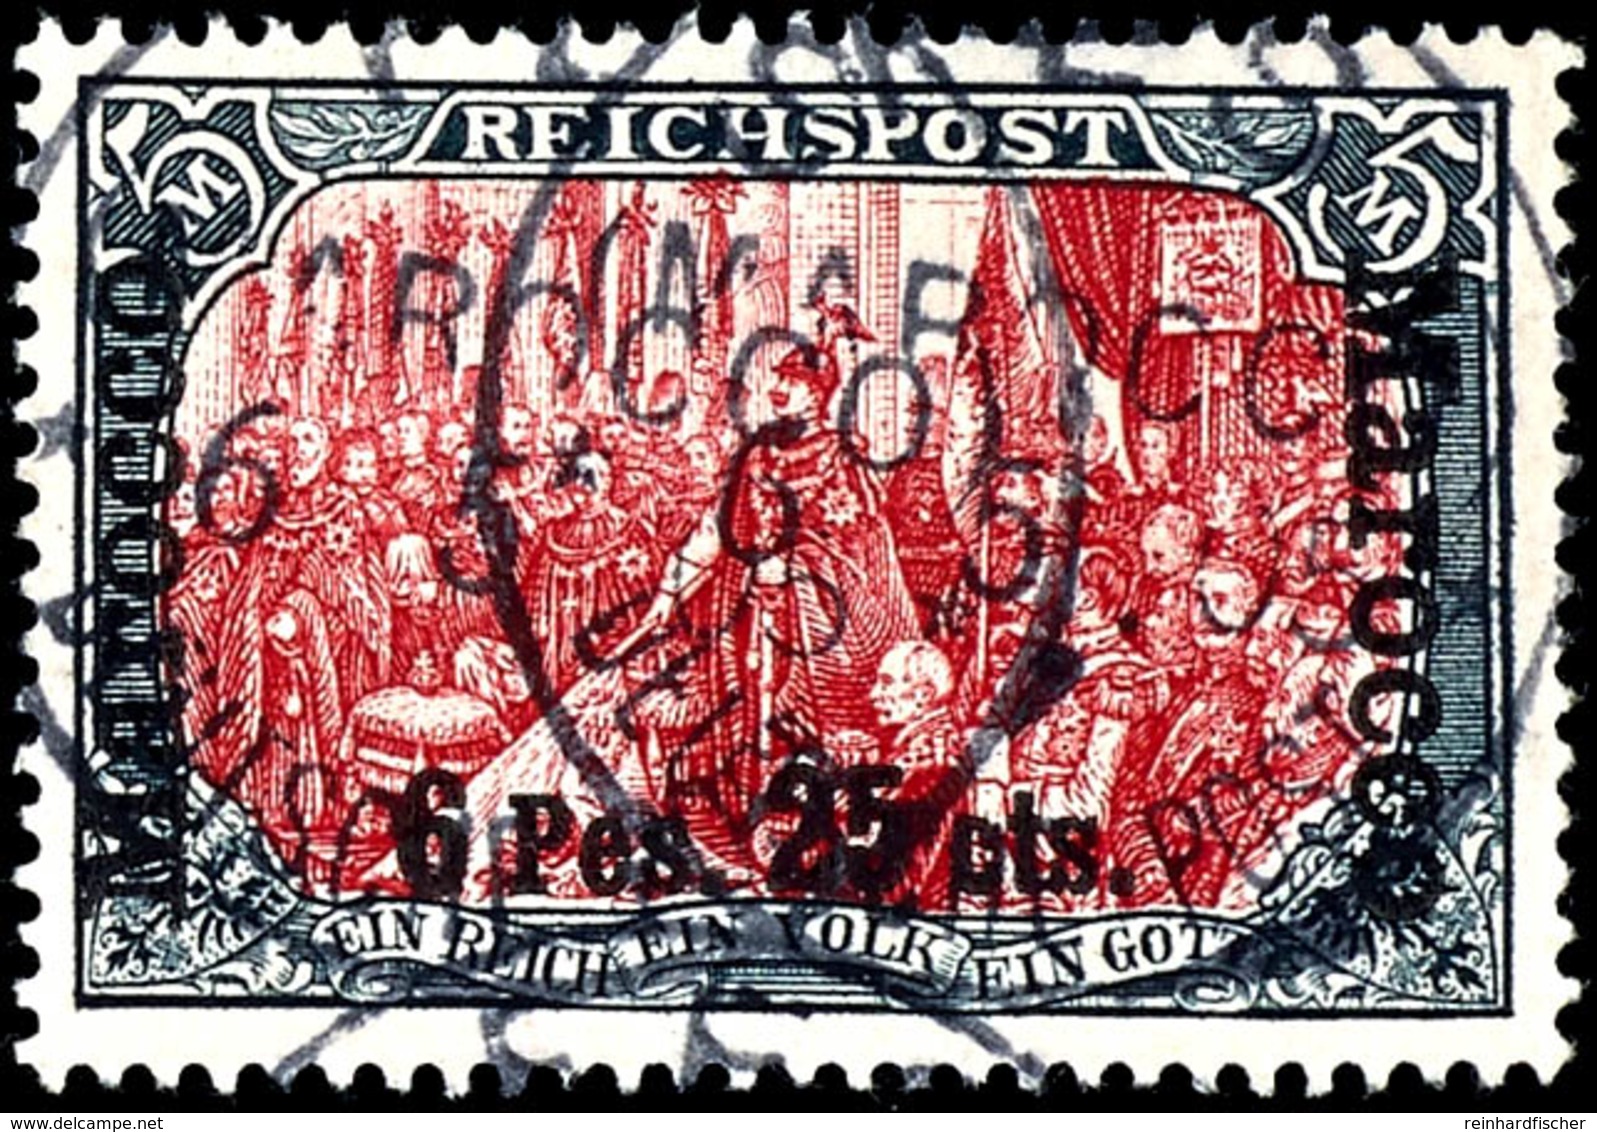 5 Mark Reichspost Mit Aufdruck "Marocco 6 Pes. 25 Cts." In Type II, Tadellose Marke, Gestempelt "FES", Michel  340,-, Ka - Morocco (offices)